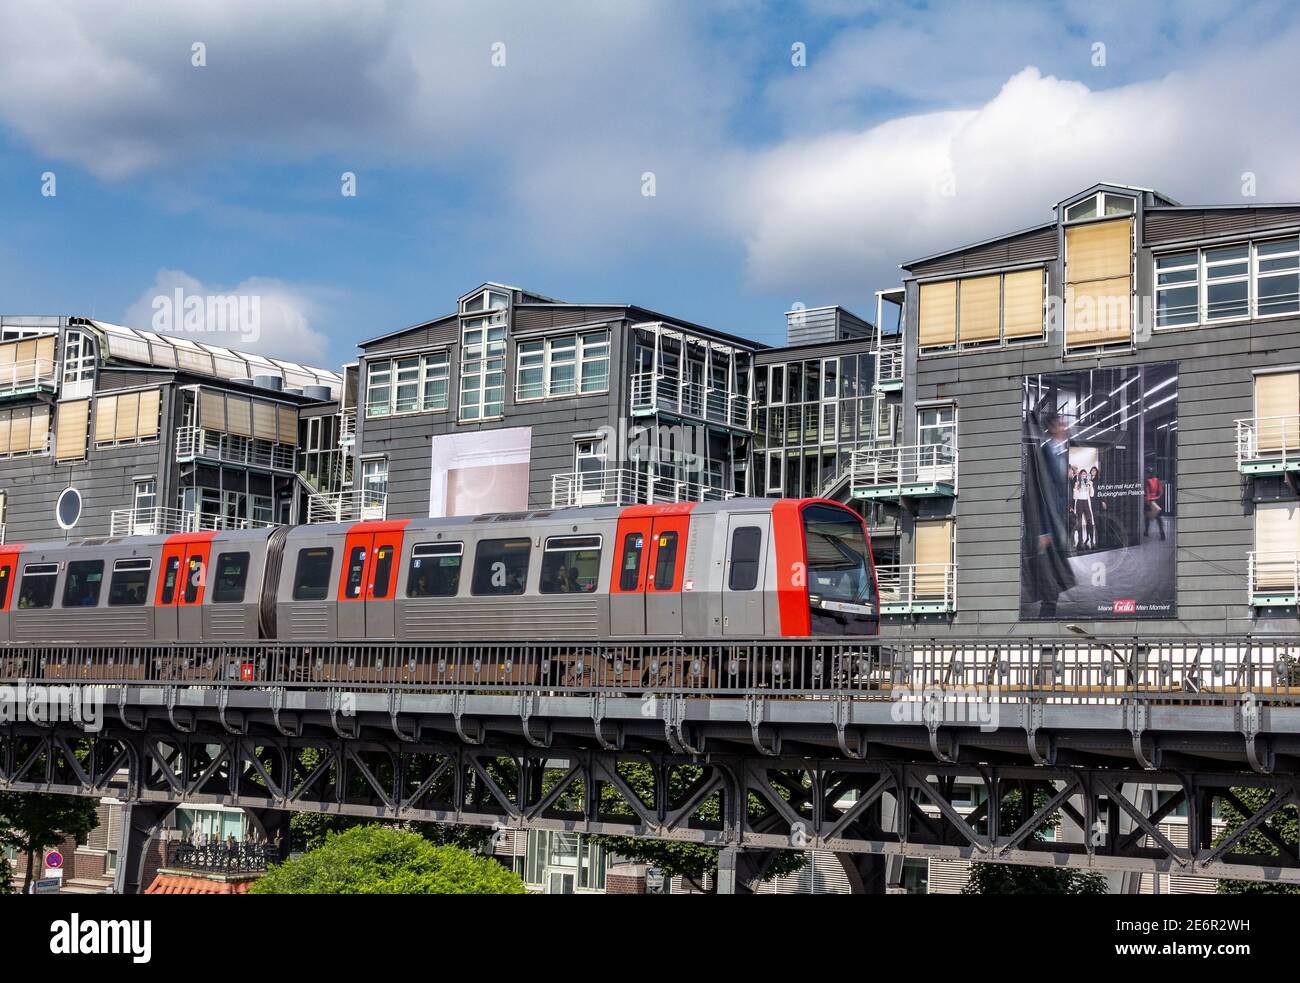 The U-Bahn Hochbahn passing the Gruner and Jahr publishing house in Hamburg, Germany Stock Photo